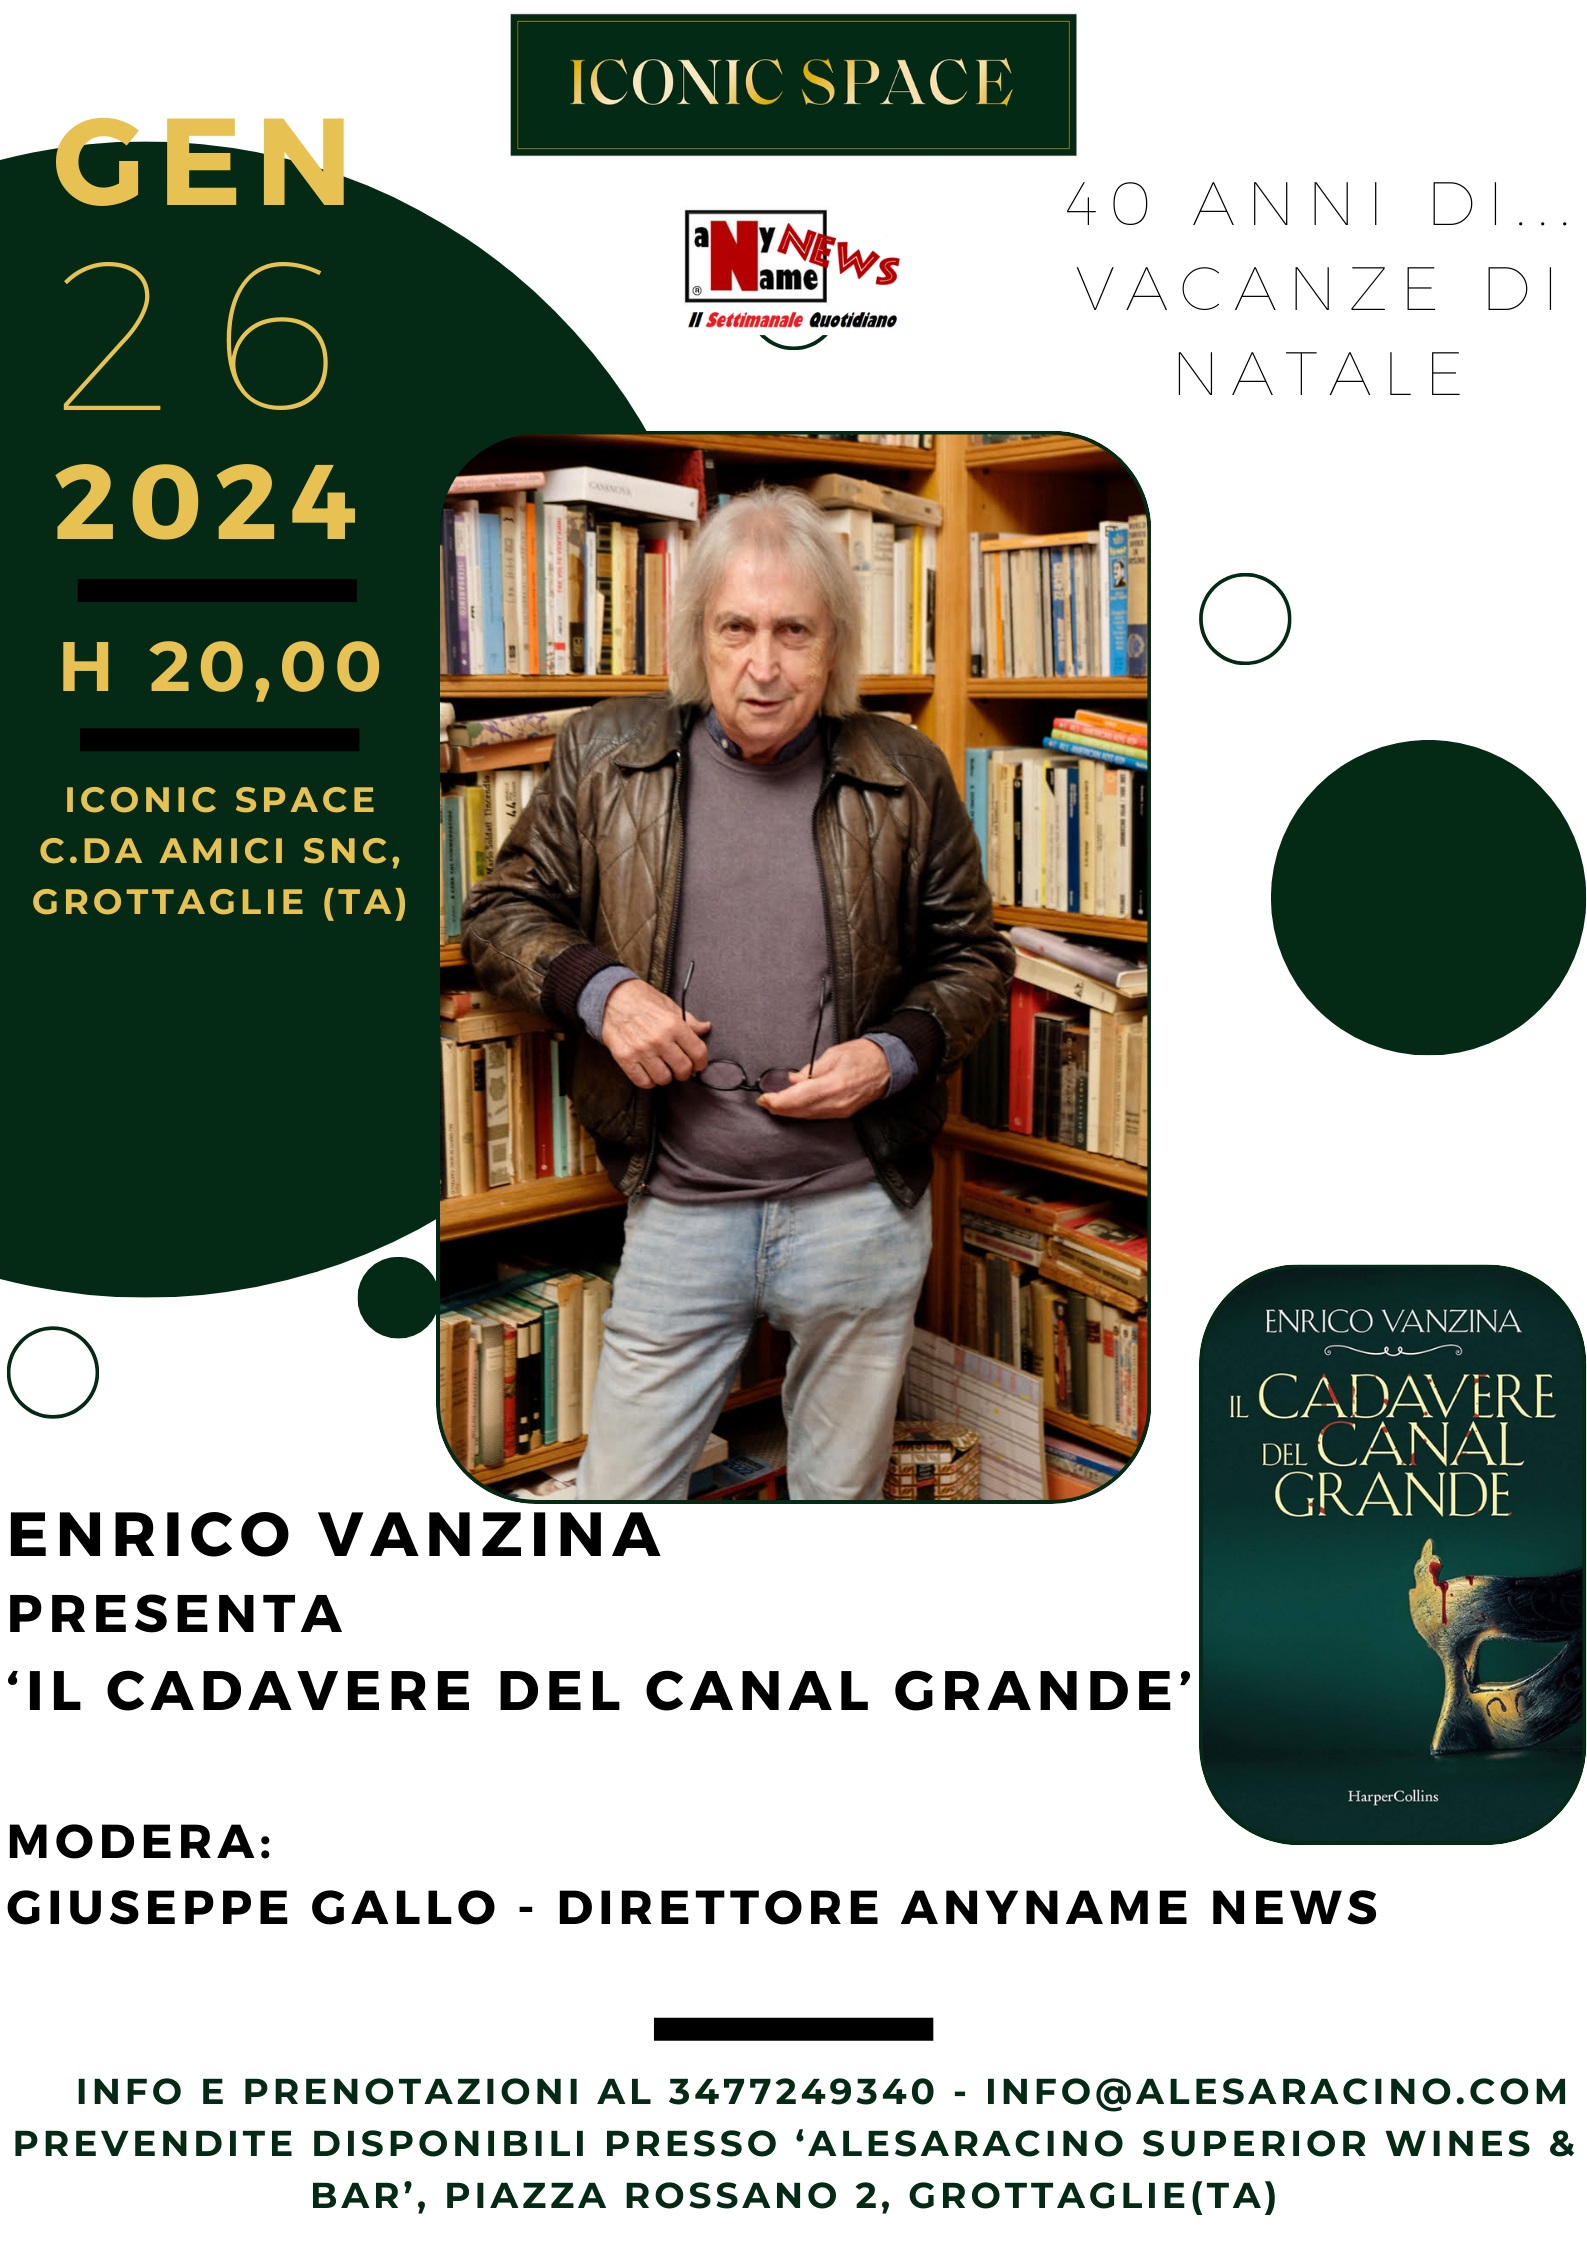 Enrico Vanzina a Grottaglie per celebrare quarant’anni di Vacanze al Cinema